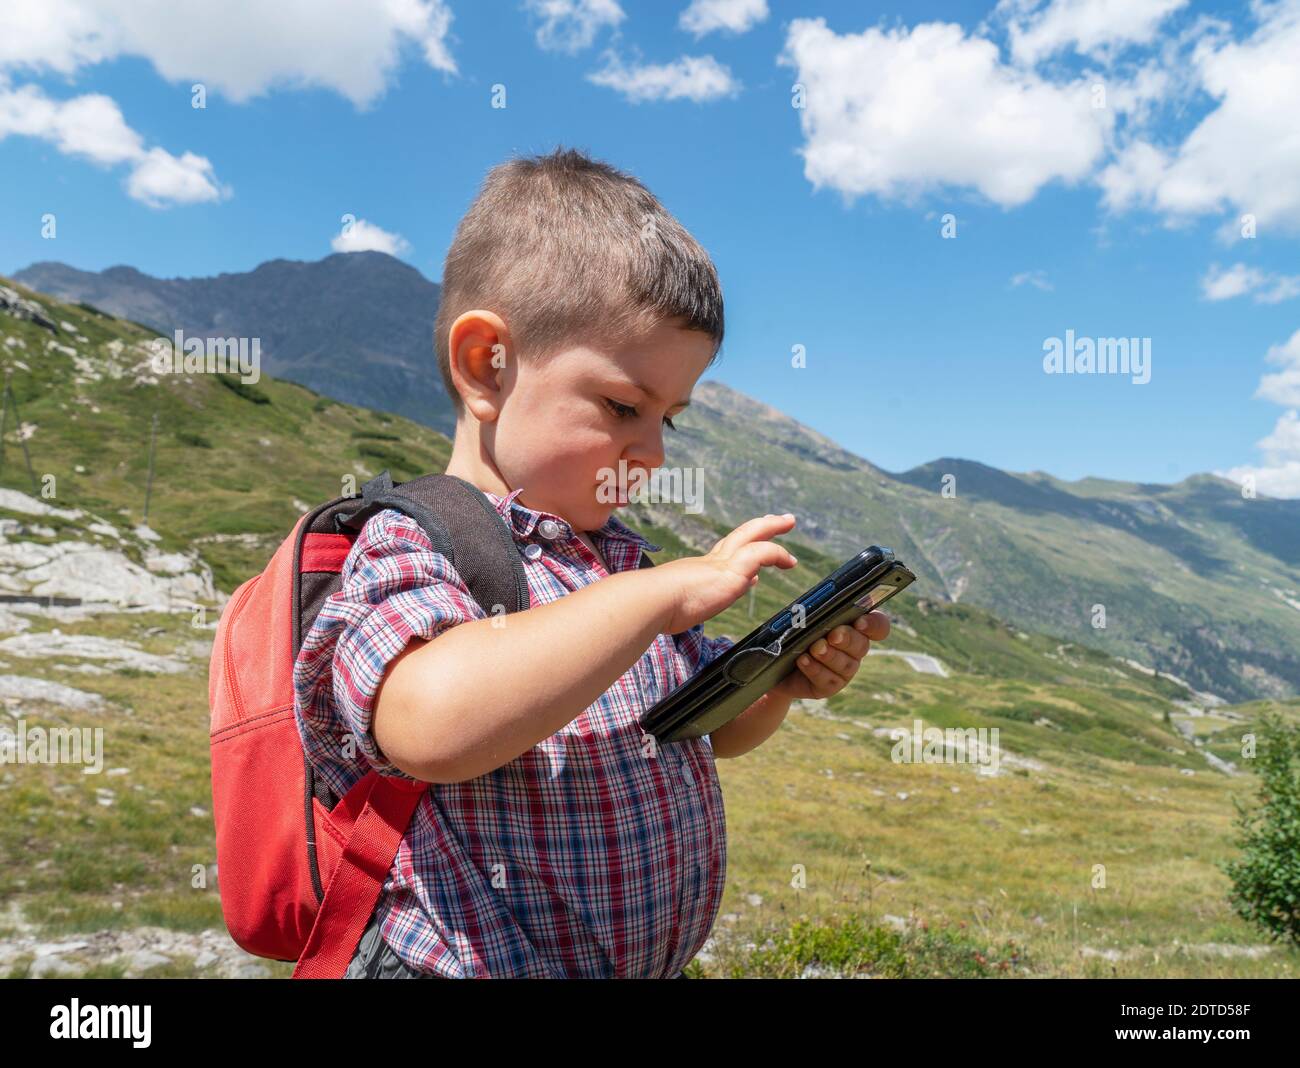 Switzerland, Canton Wallis, Zermatt, Boy with smartphone hiking in mountains Stock Photo